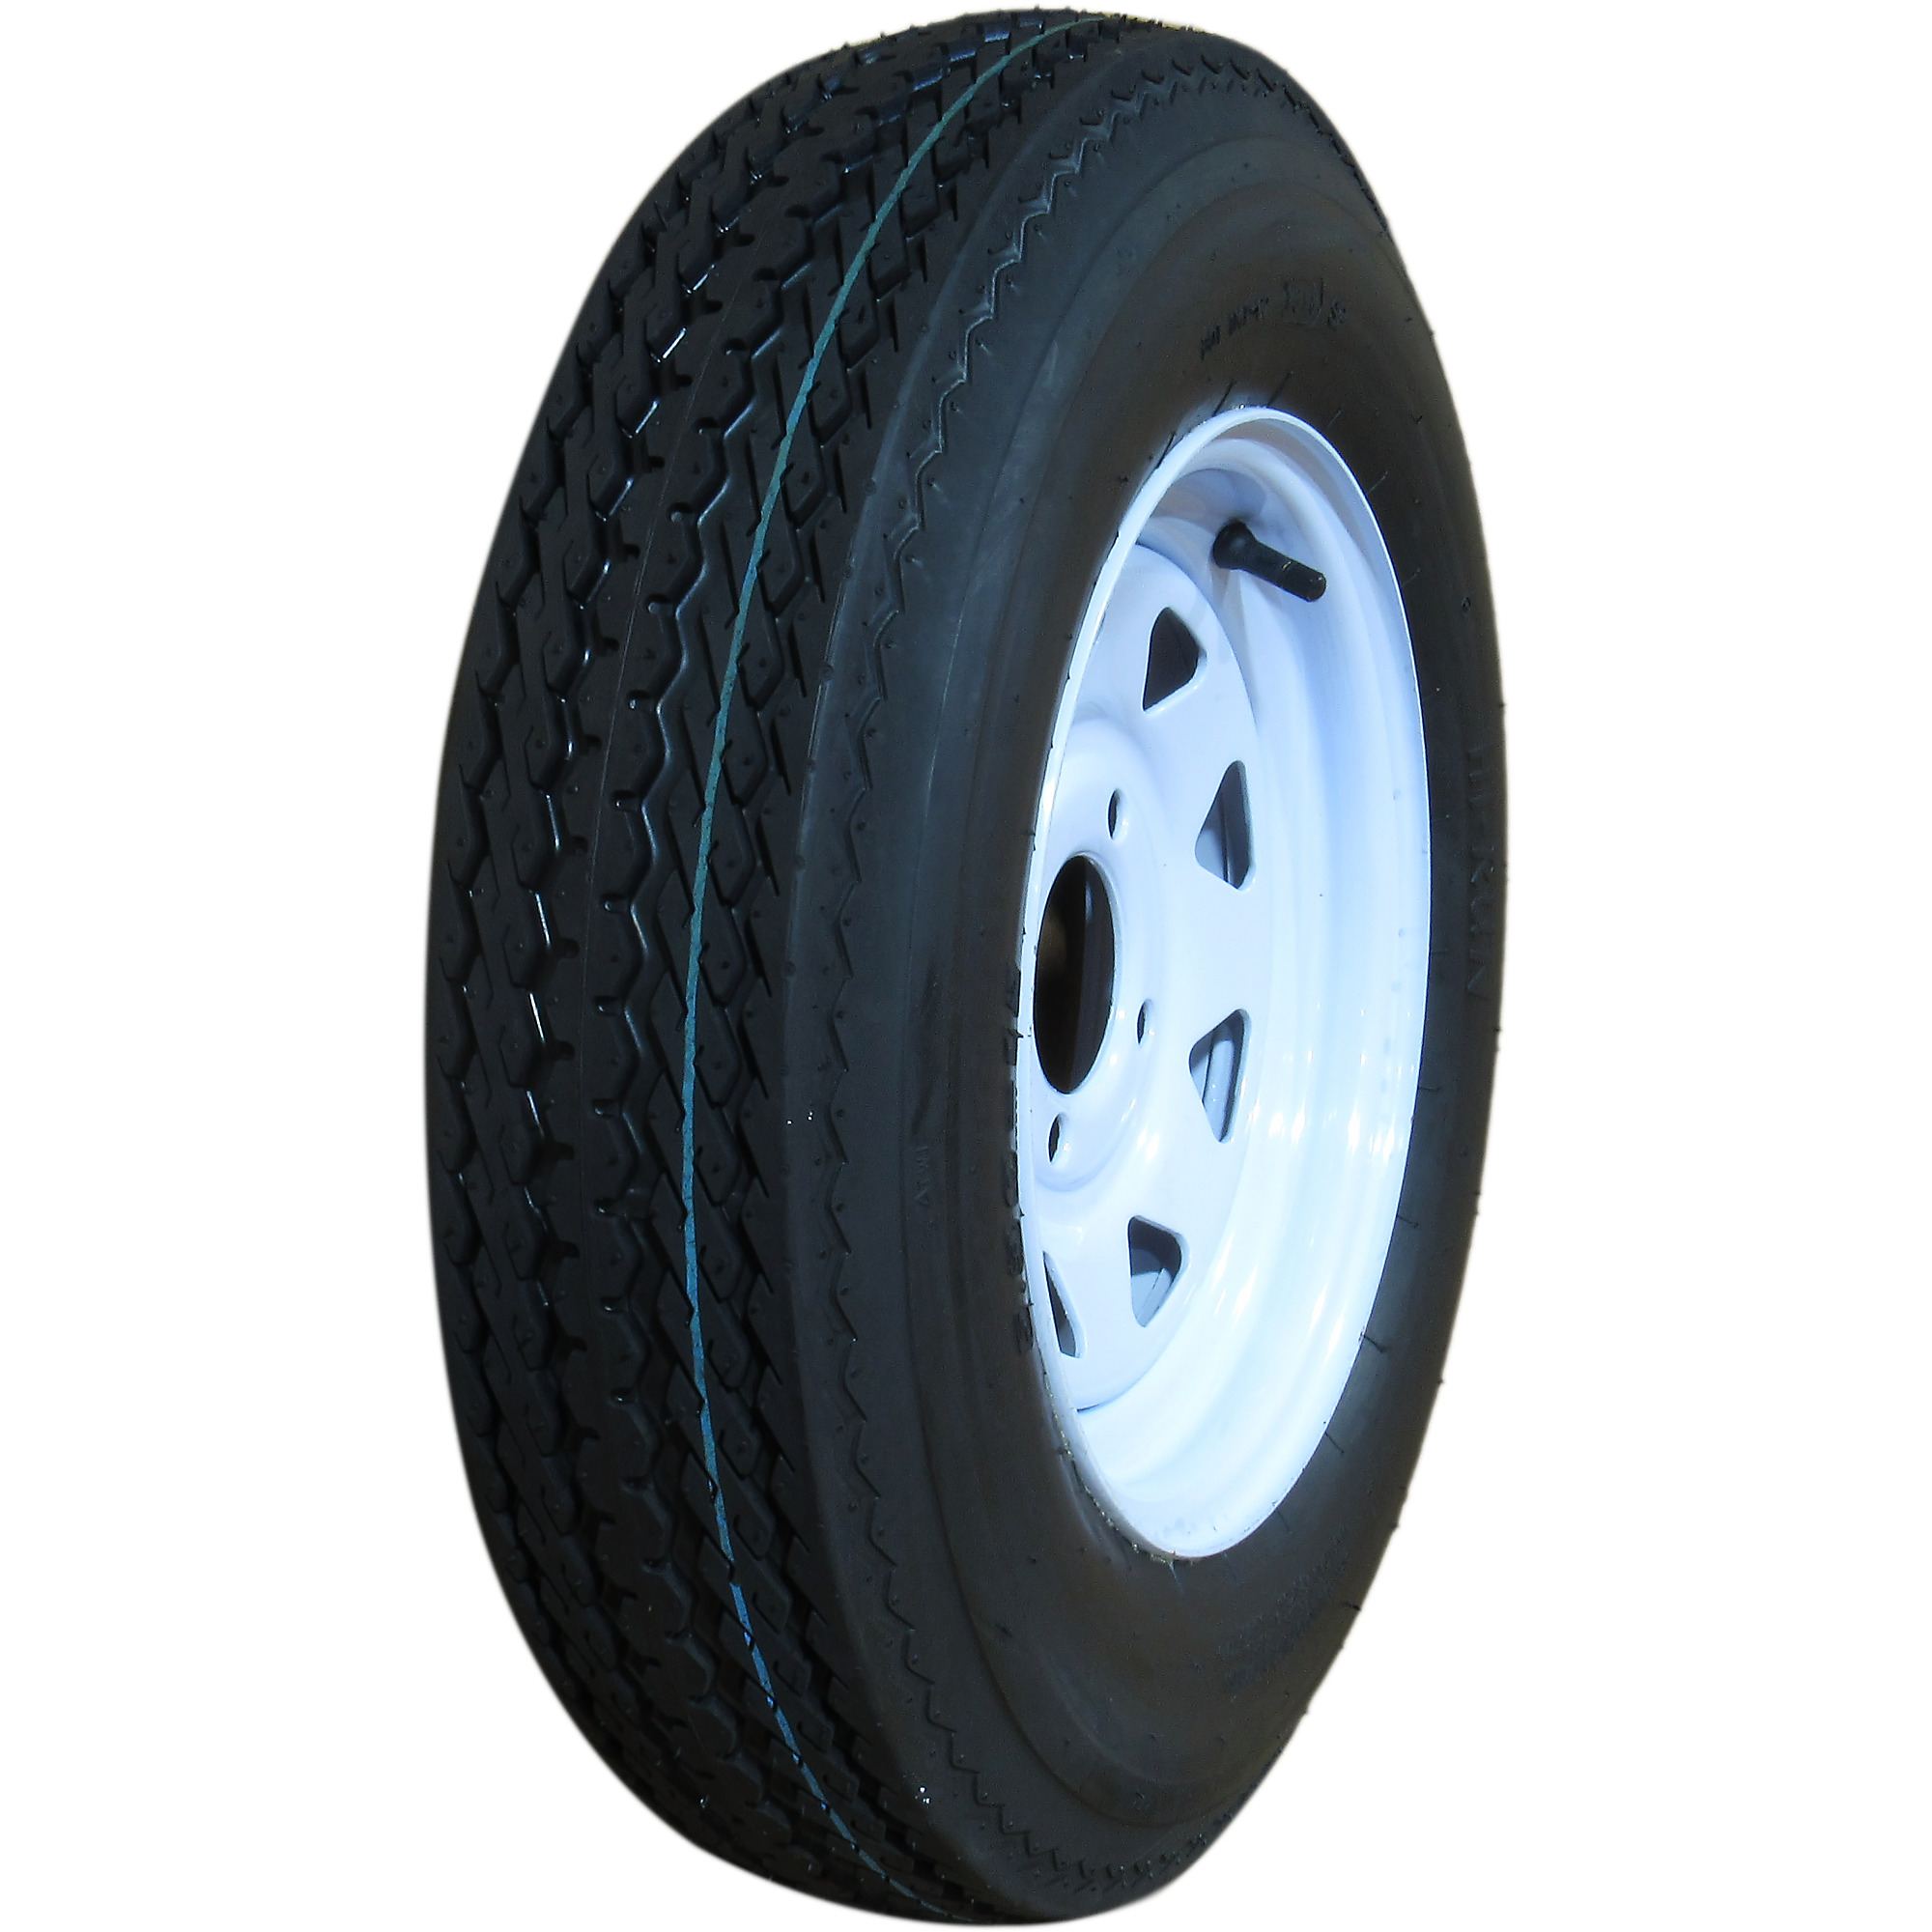 HI-RUN, Highway Trailer Tire Assembly, Bias-Ply, Tire Size 5.70-8 Load Range Rating B, Bolt Holes (qty.) 5 Model ASB1043